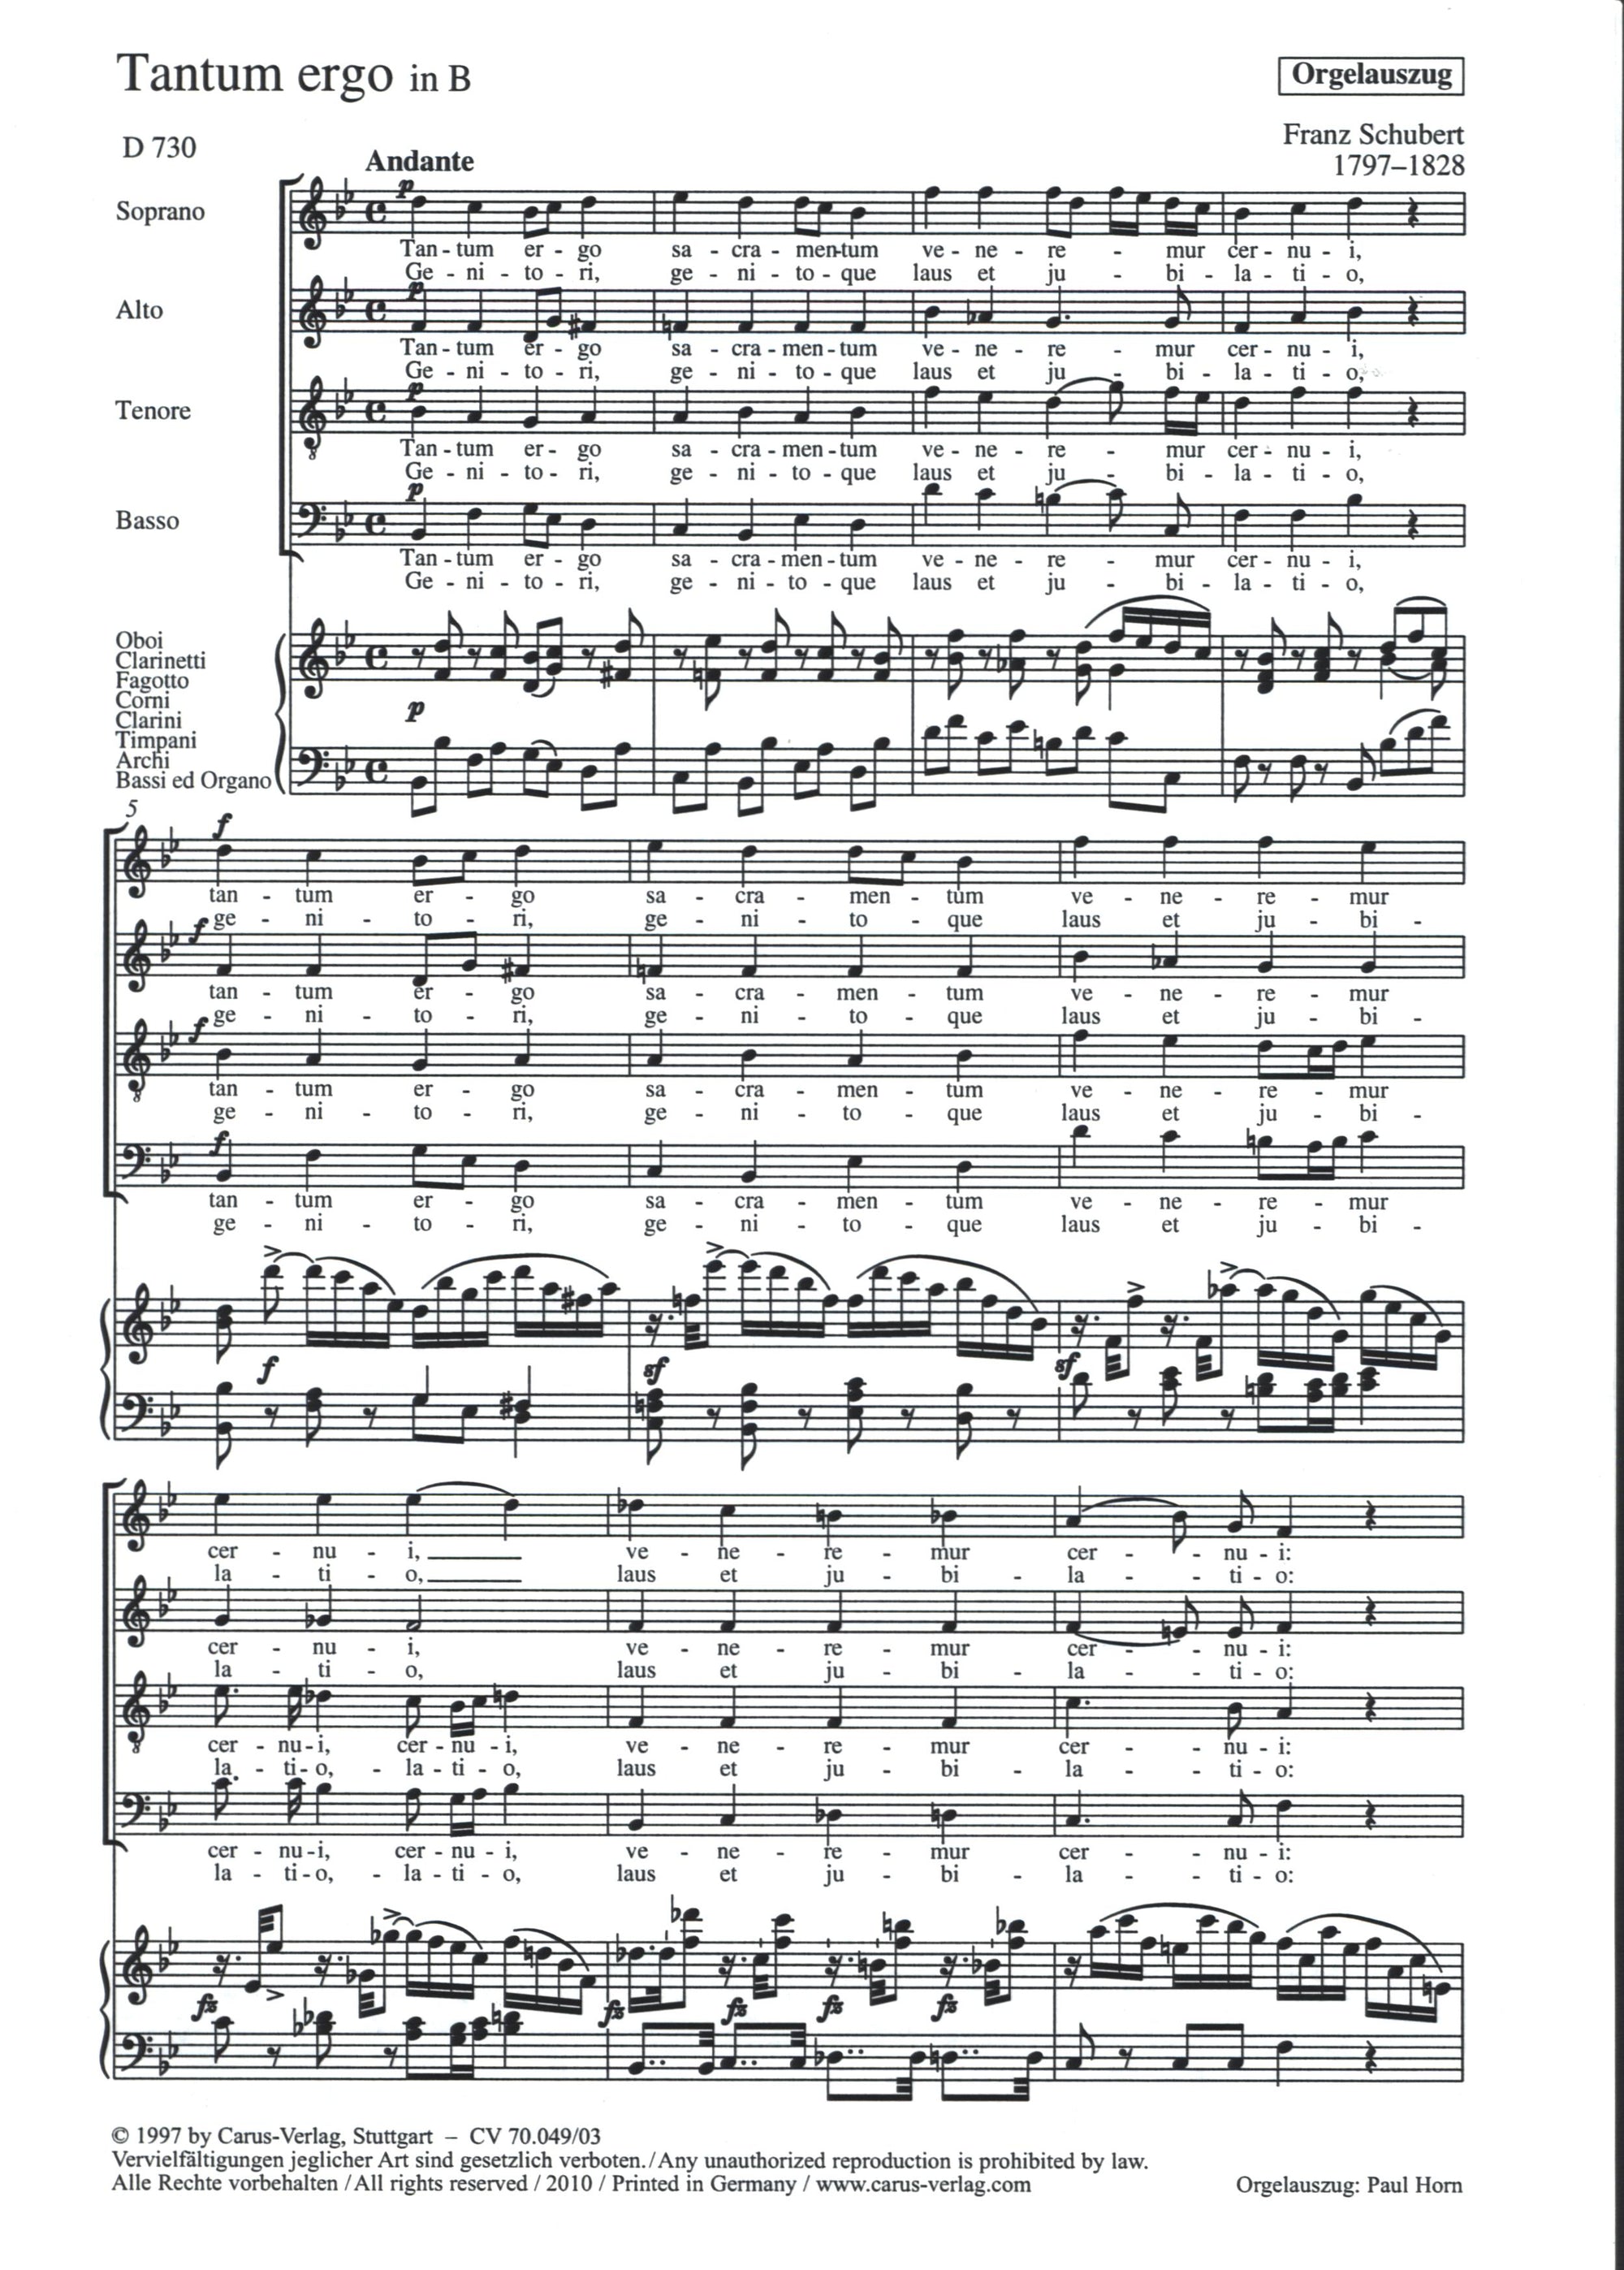 Schubert: Tantum ergo in B-flat Major, D. 730